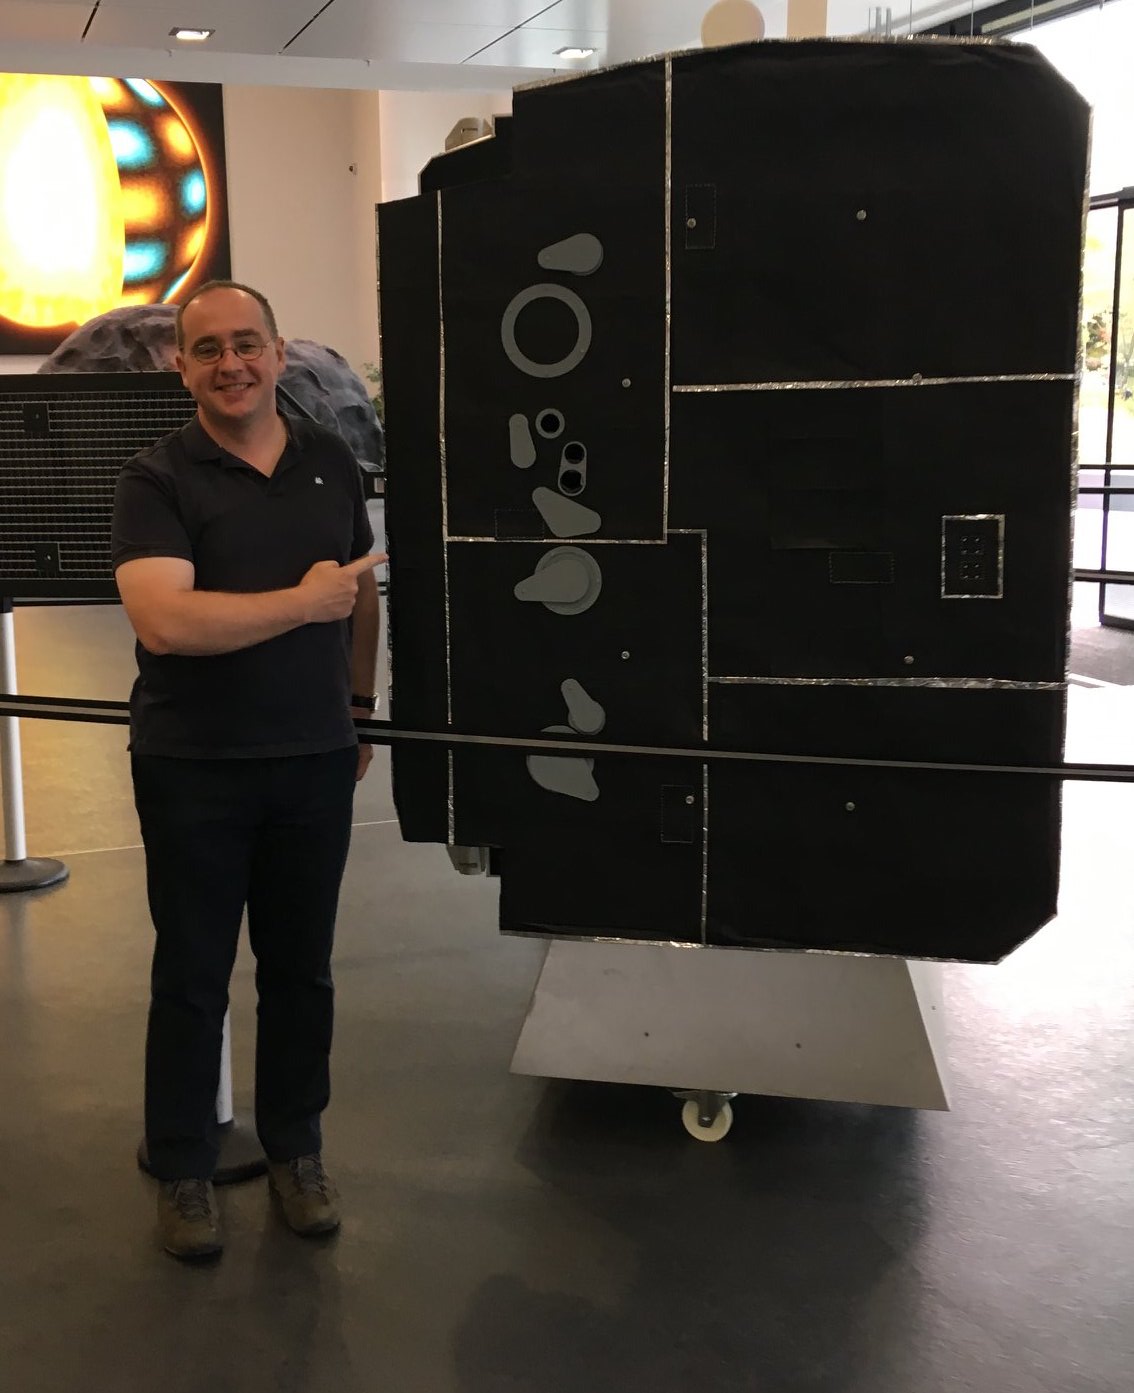 Koen points to the EUI doors on the Solar Orbiter model on display in MPS.